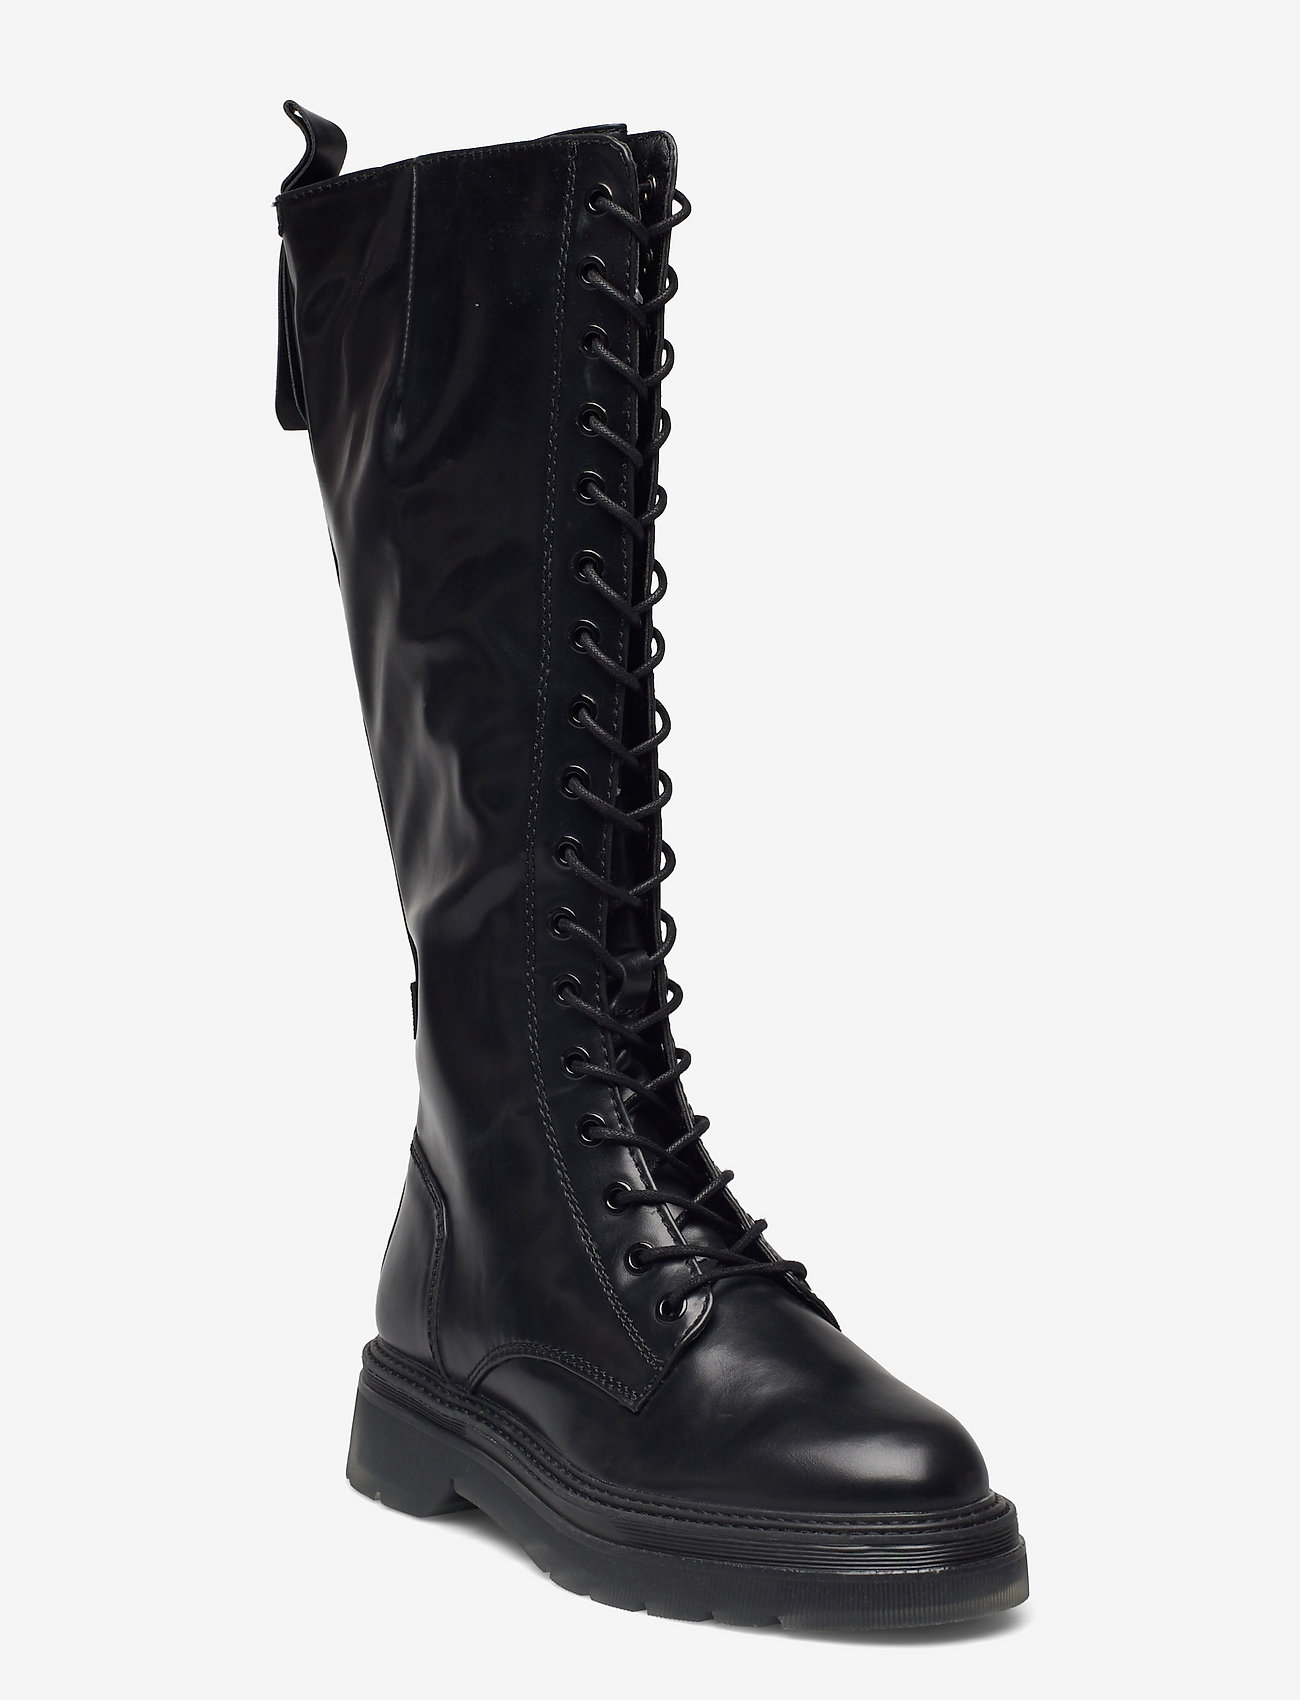 Tamaris Woms Boots - Long boots | Boozt.com